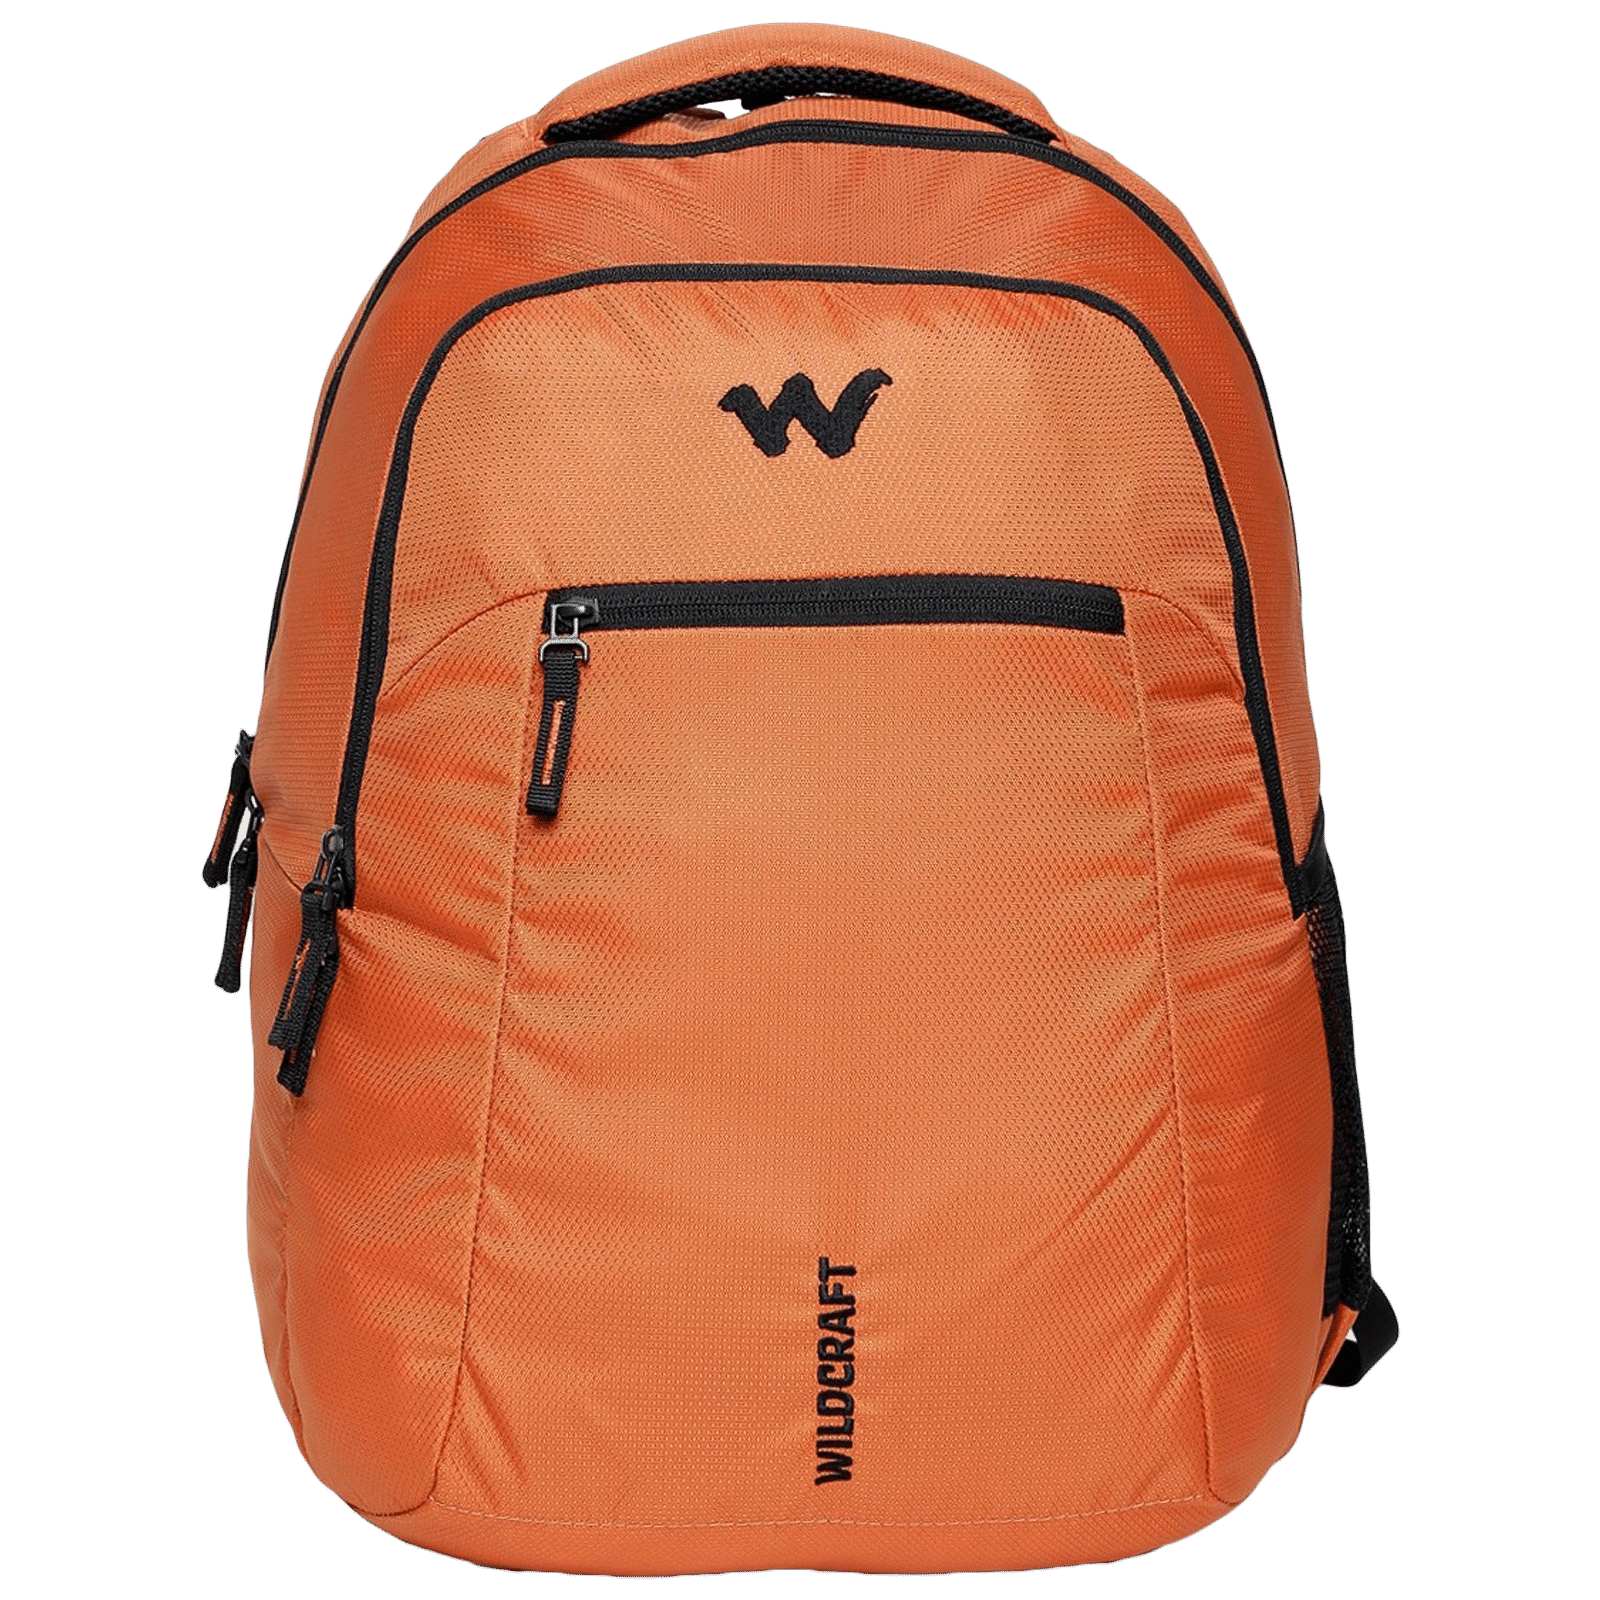 Wildcraft Colossal 40 L Backpack Black - Price in India | Flipkart.com